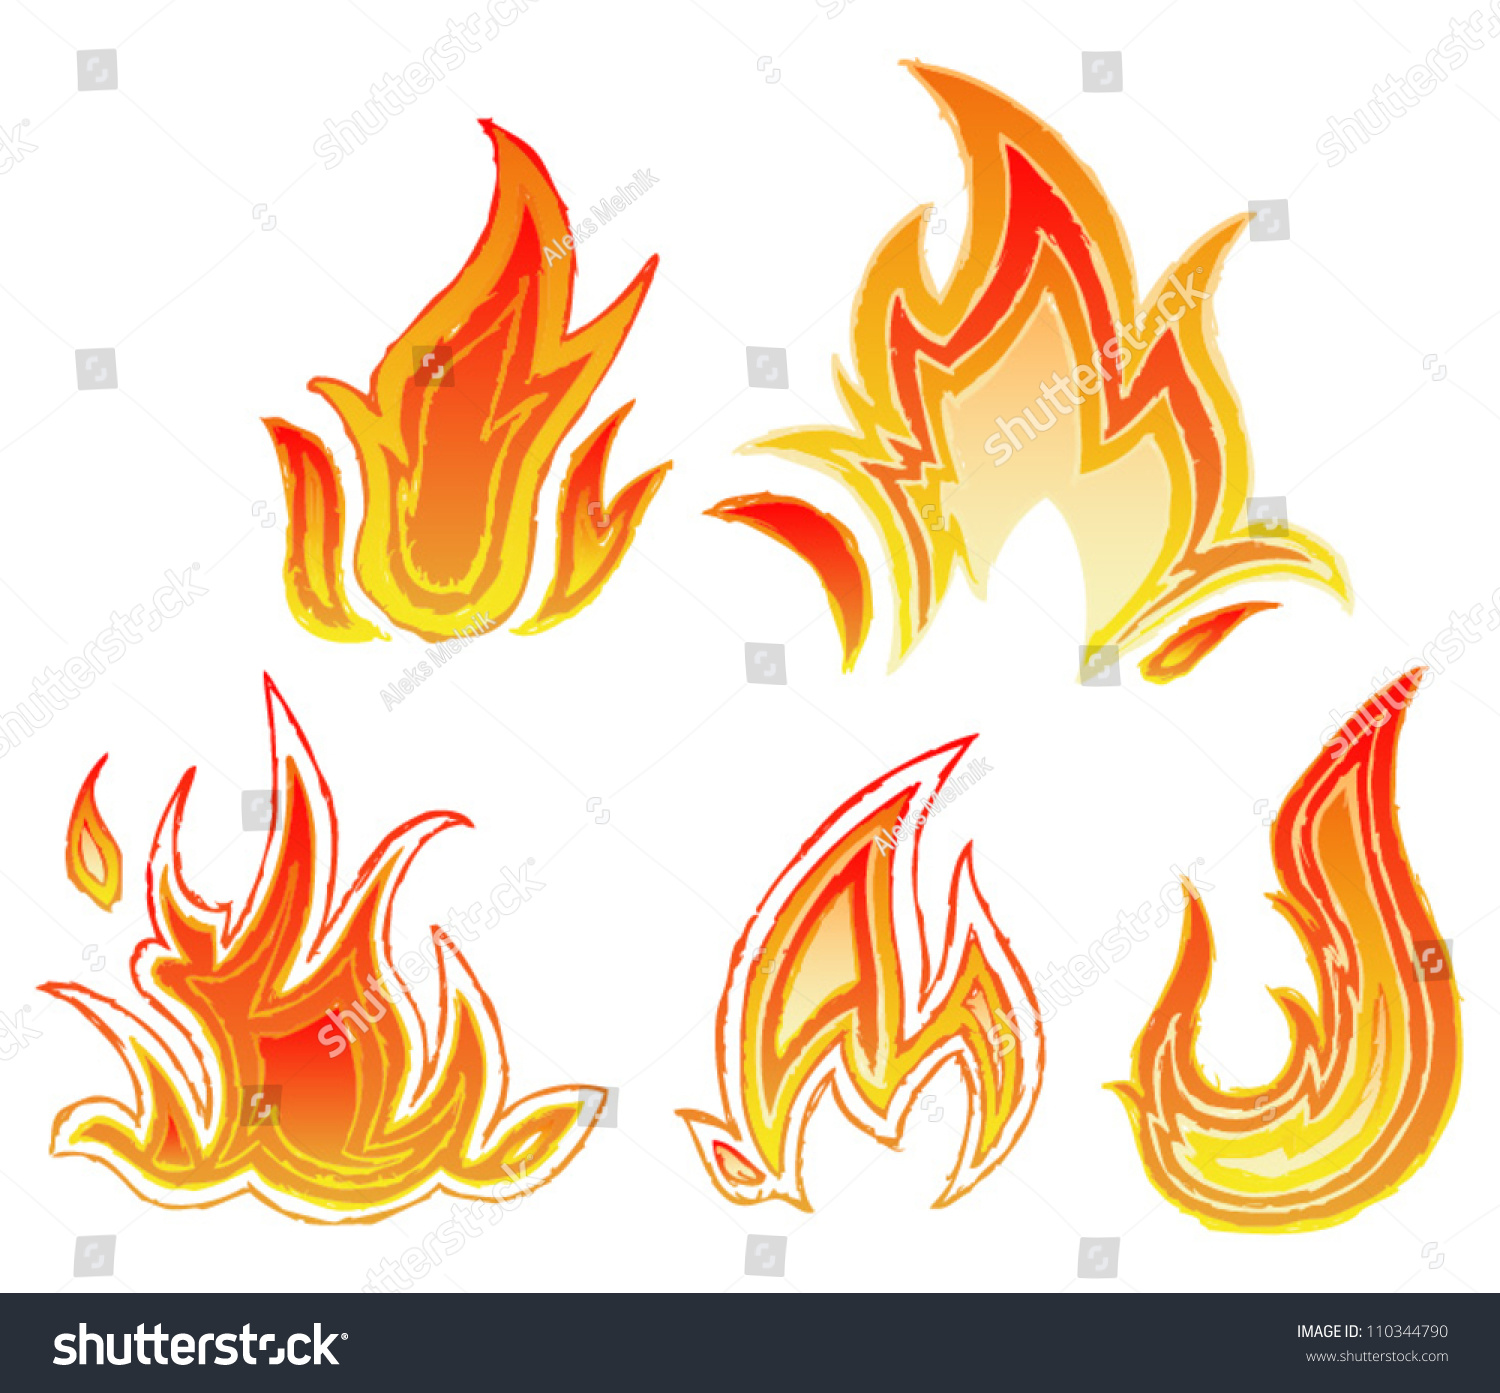 Fire Flames Sketch Stock Vector 110344790 - Shutterstock